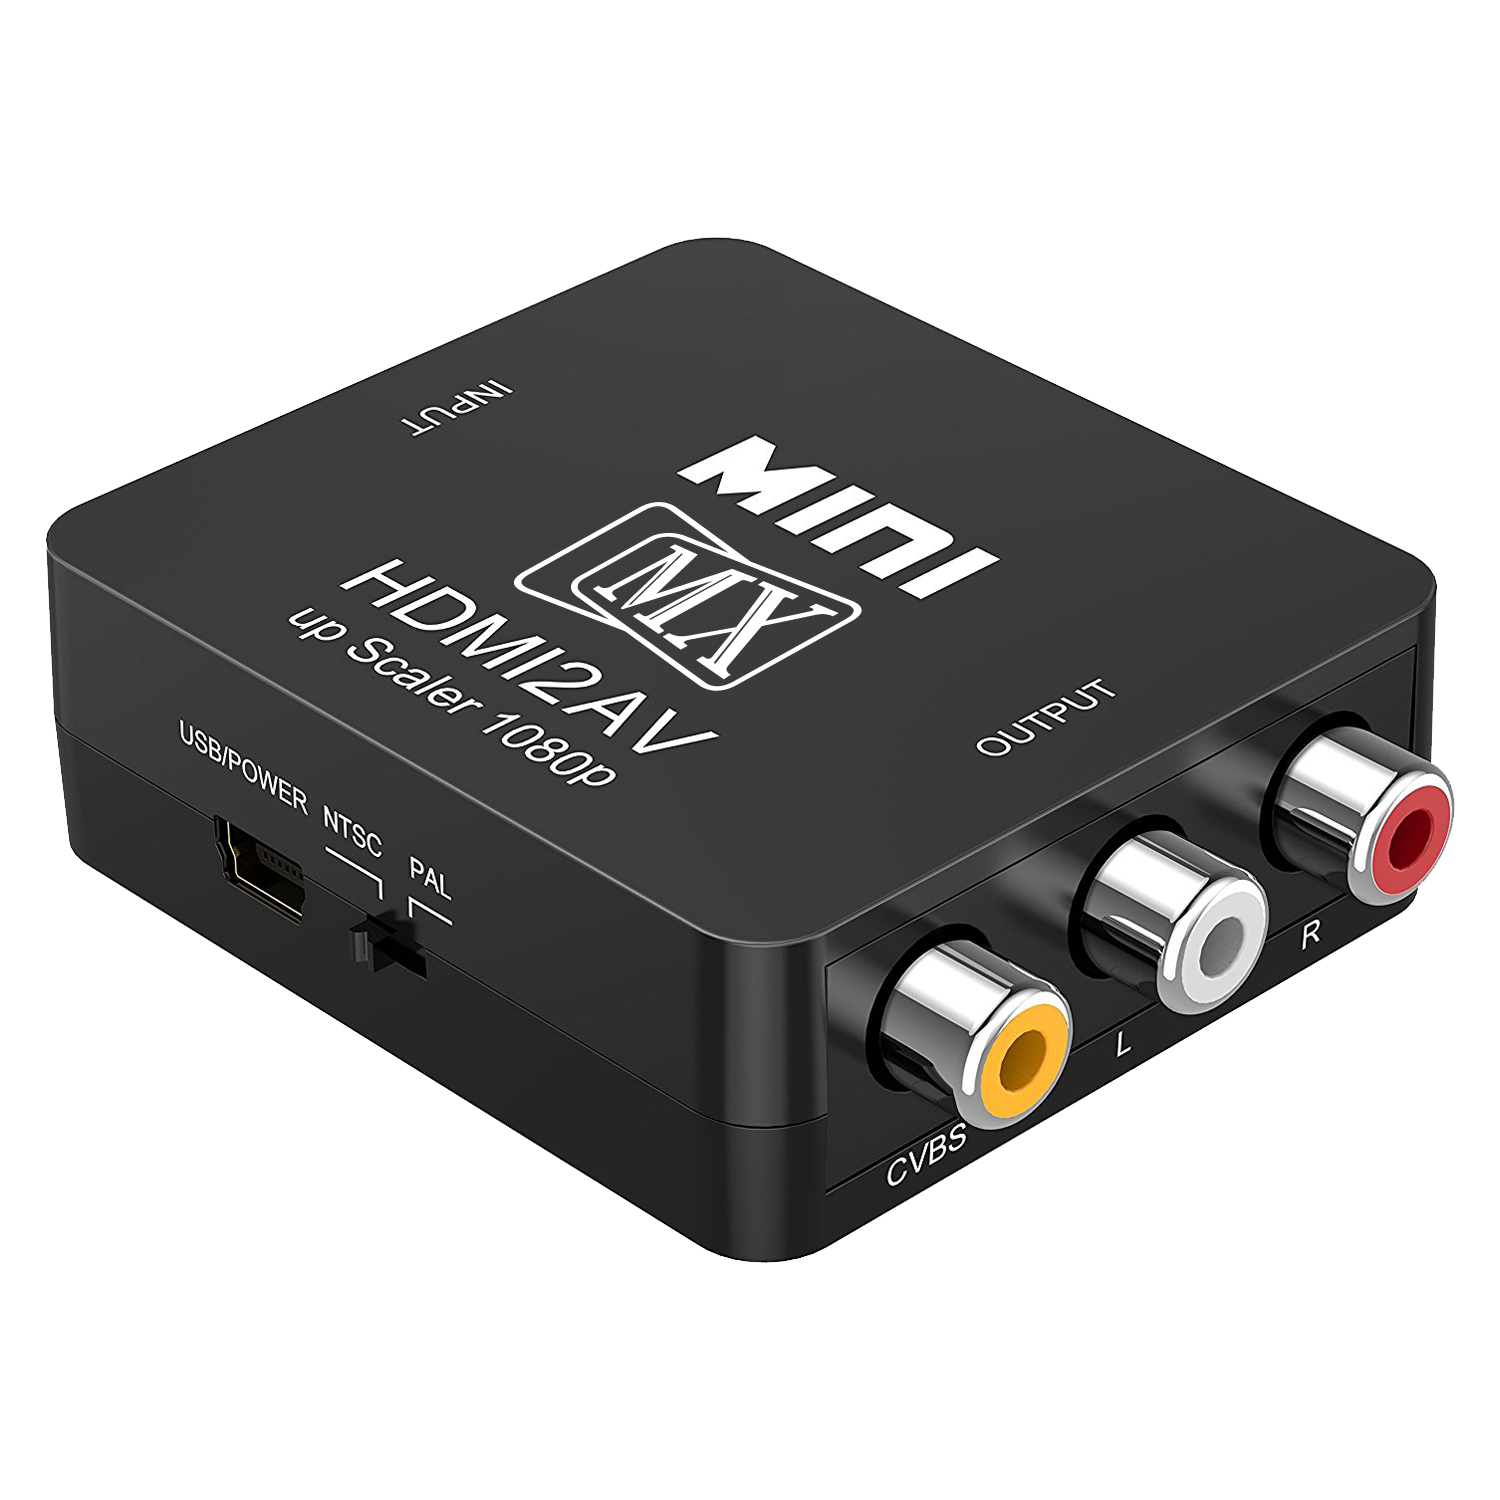 Pure AV HDMI to HDMI Cable (6') AV22300-06 B&H Photo Video